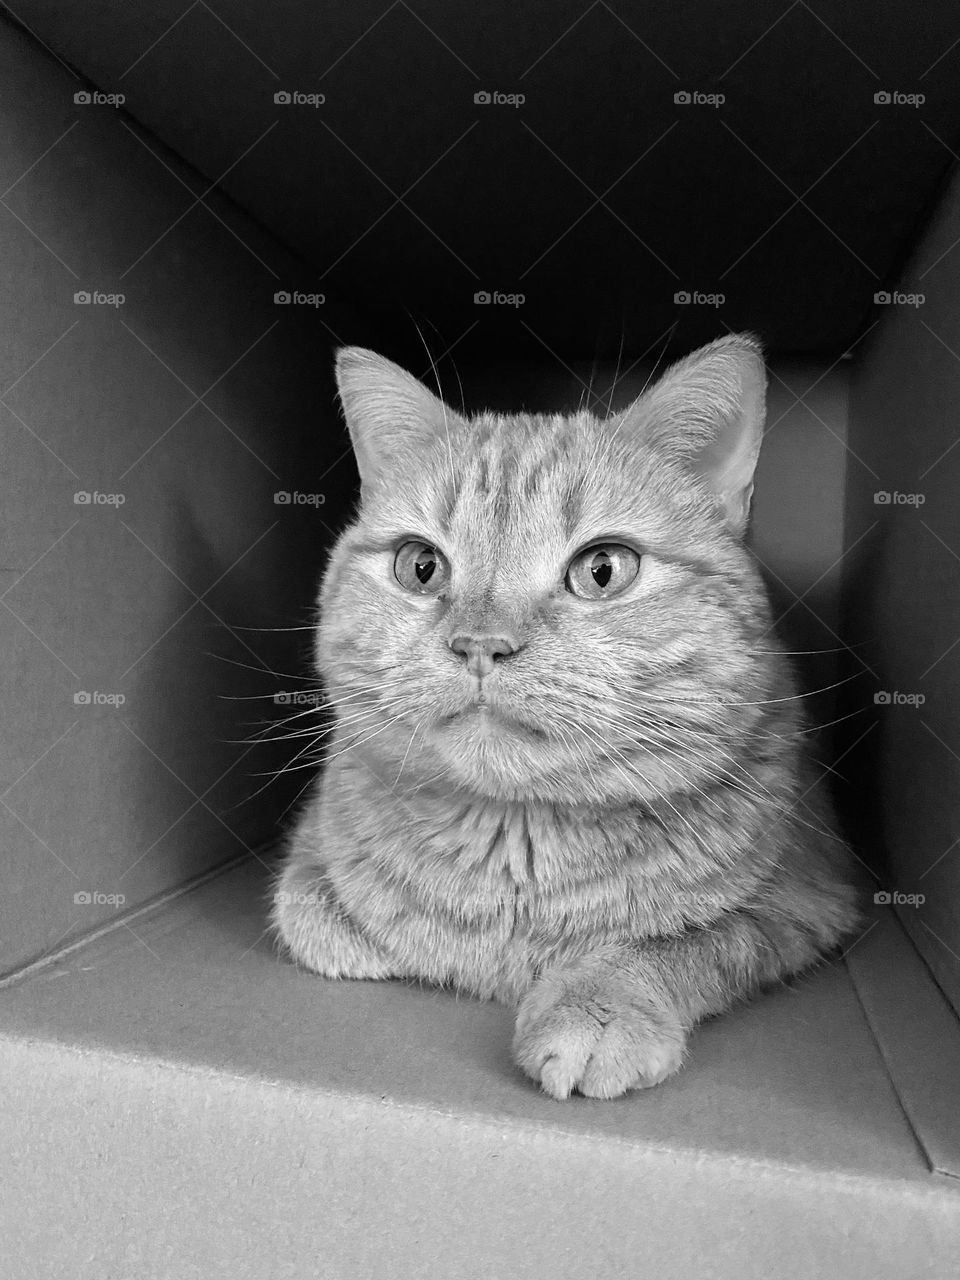 A tabby cat sitting in a cardboard box 